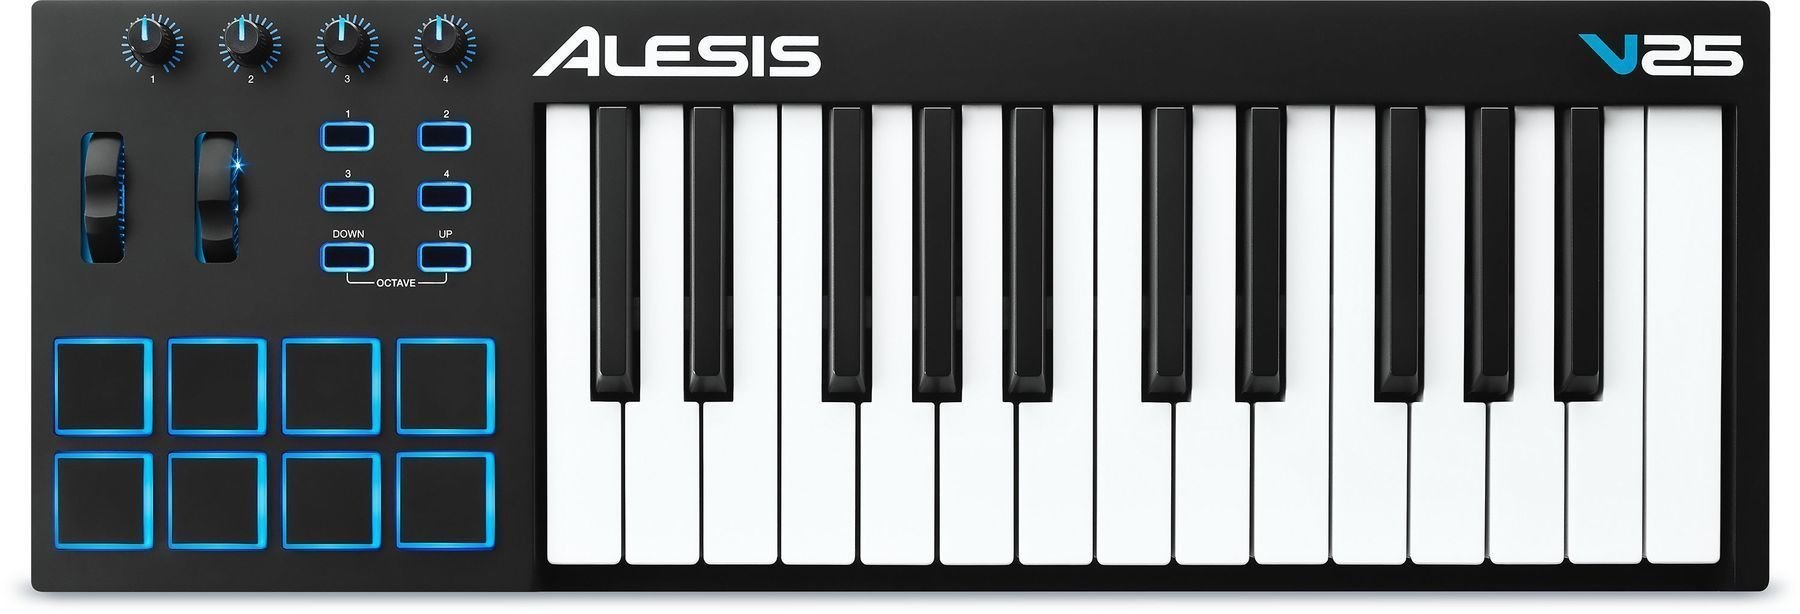 MIDI keyboard Alesis V25